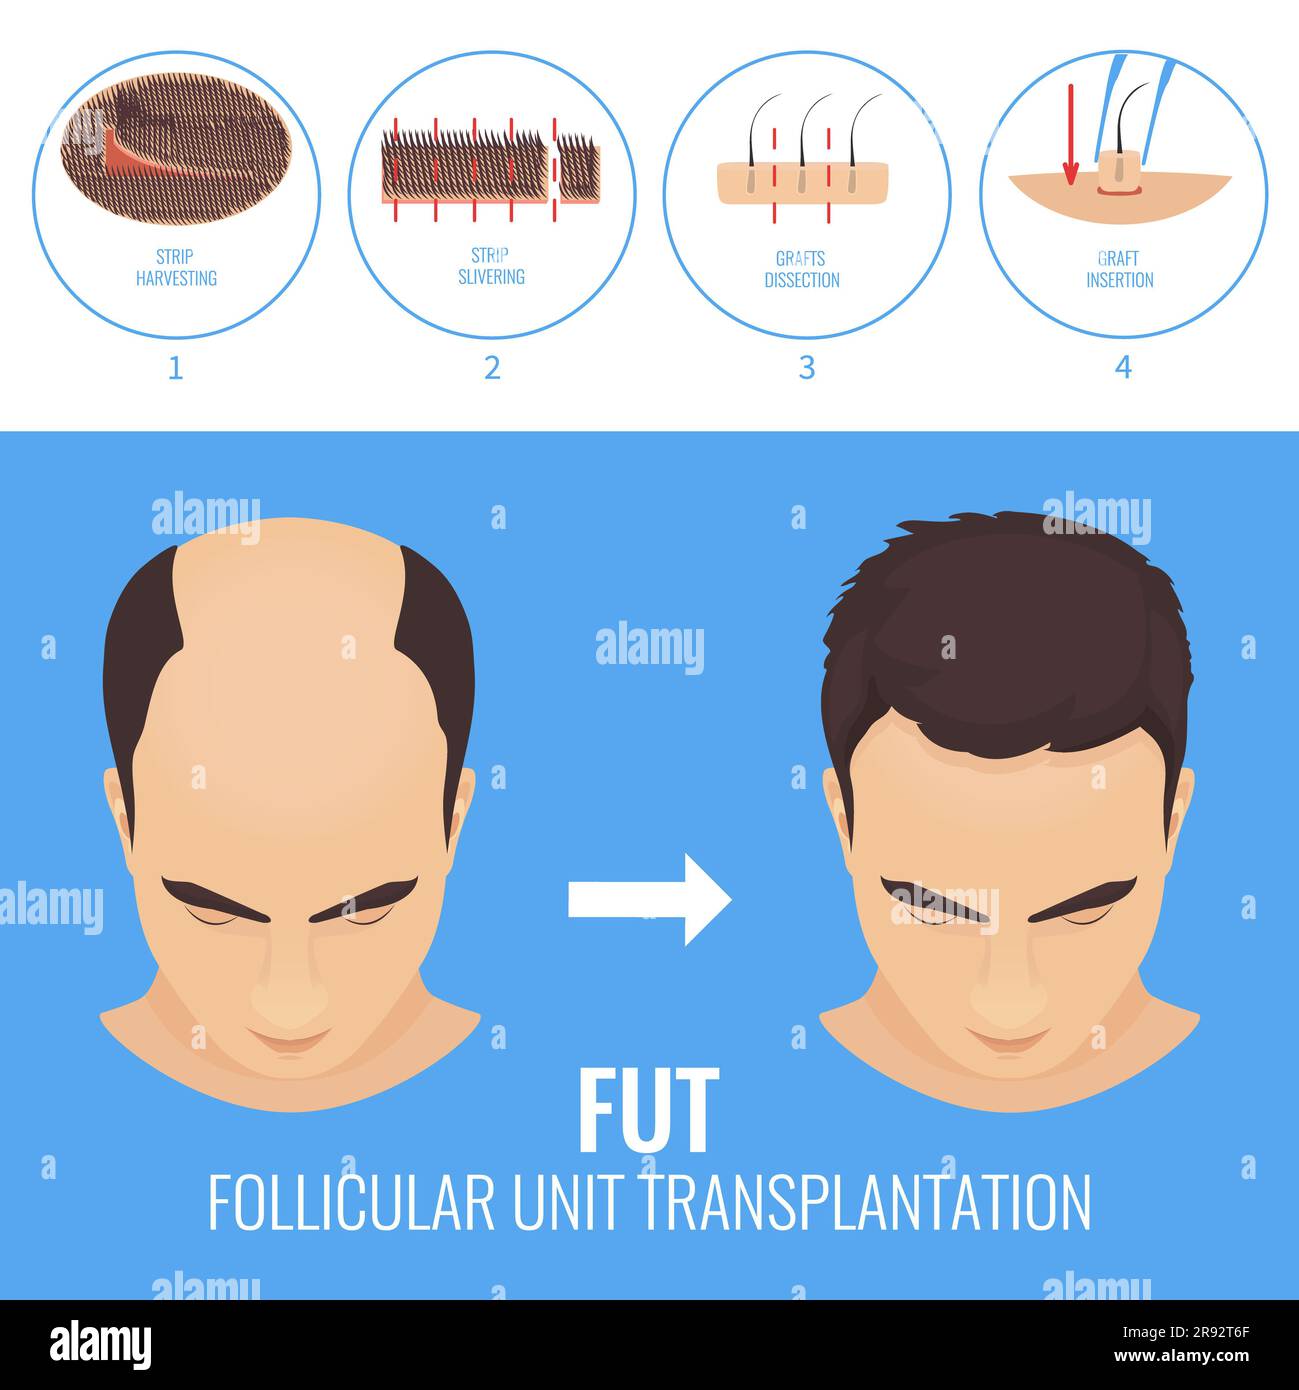 FUT hair transplantation, illustration Stock Photo